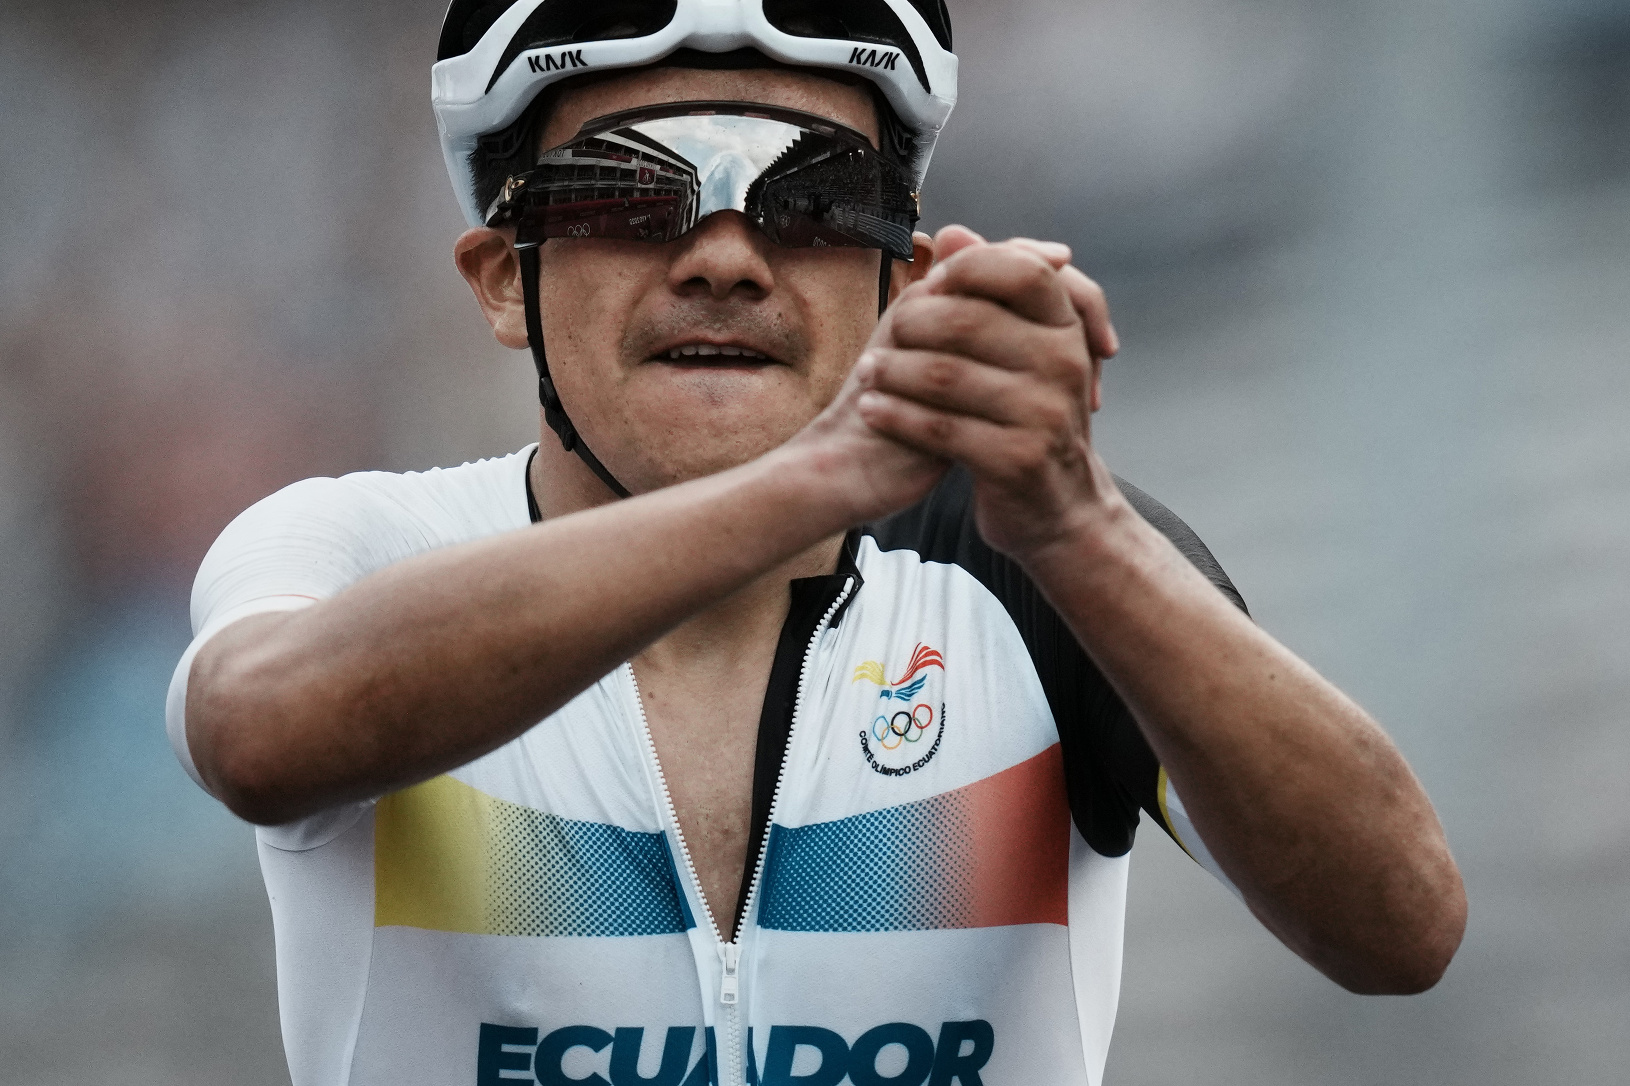 Ekvádorský cyklista Richard Carapaz